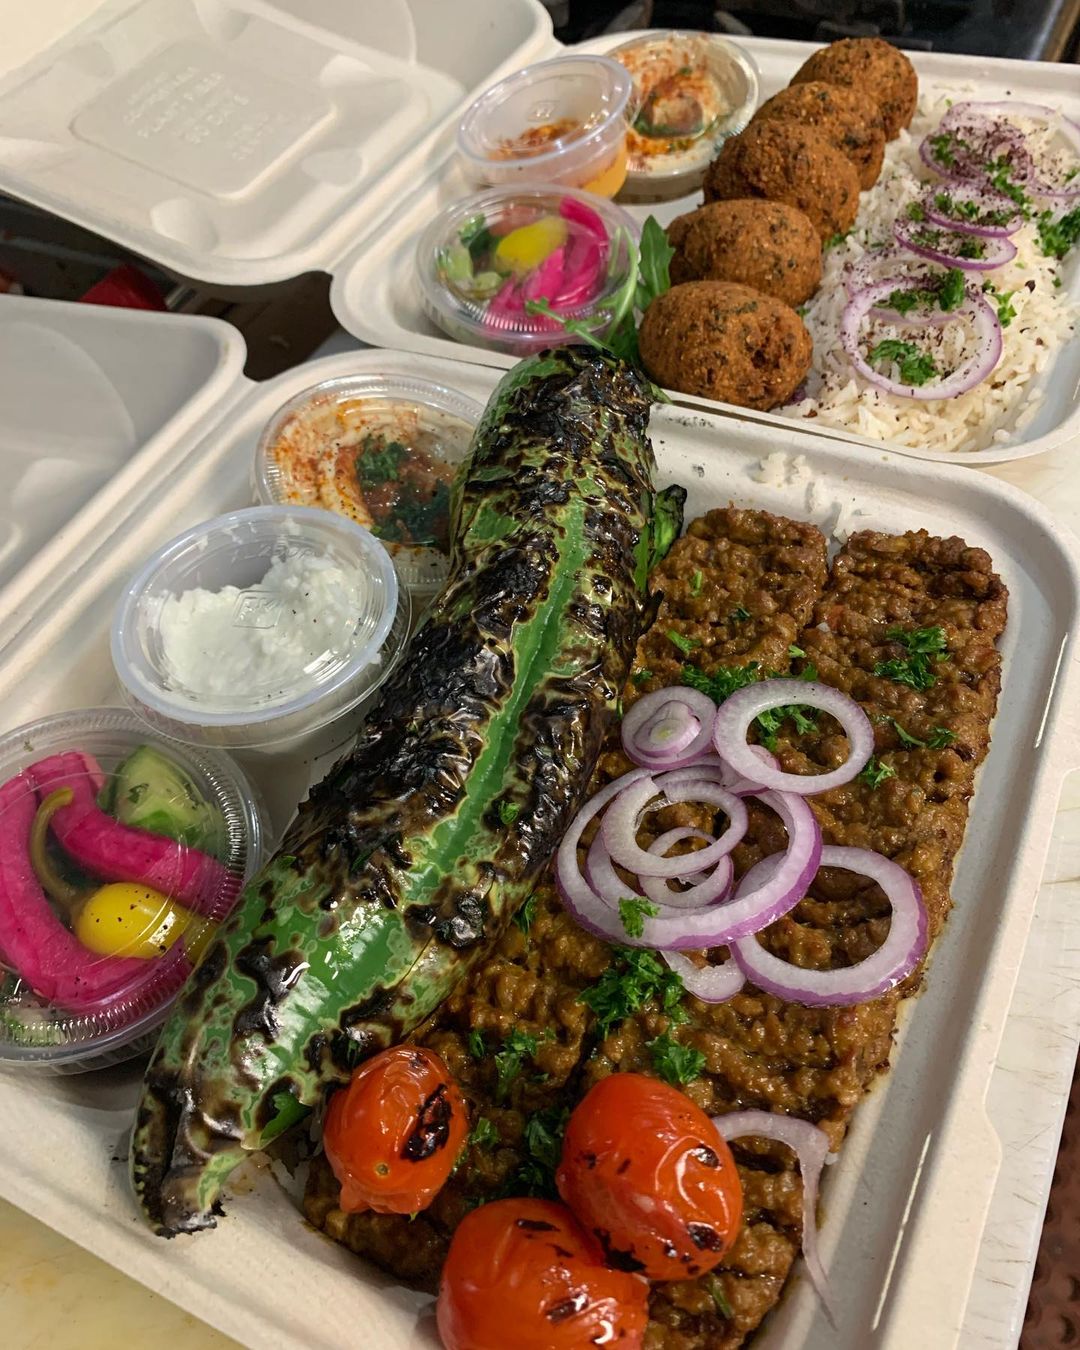 BeeWali's Vegan AF meals in trays